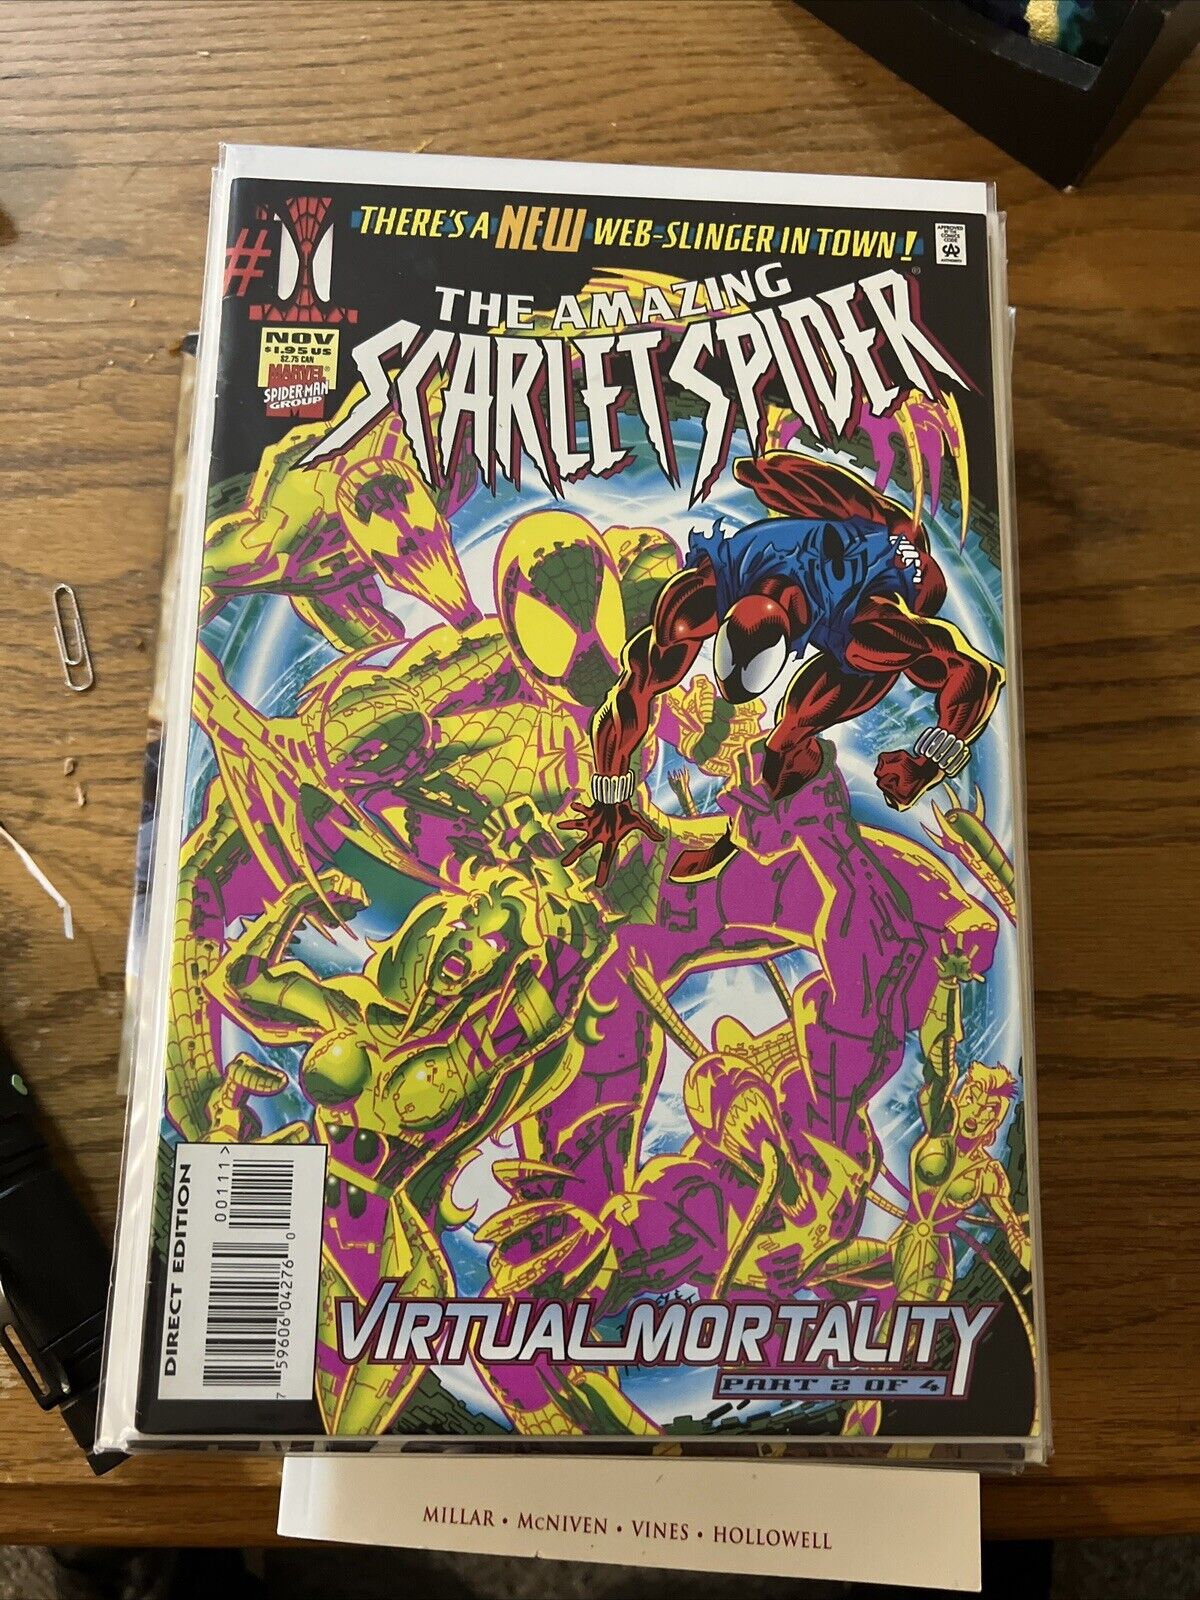 AMAZING SCARLET SPIDER #1 Marvel Comics VARIANT E COVER 2019 Spider Man